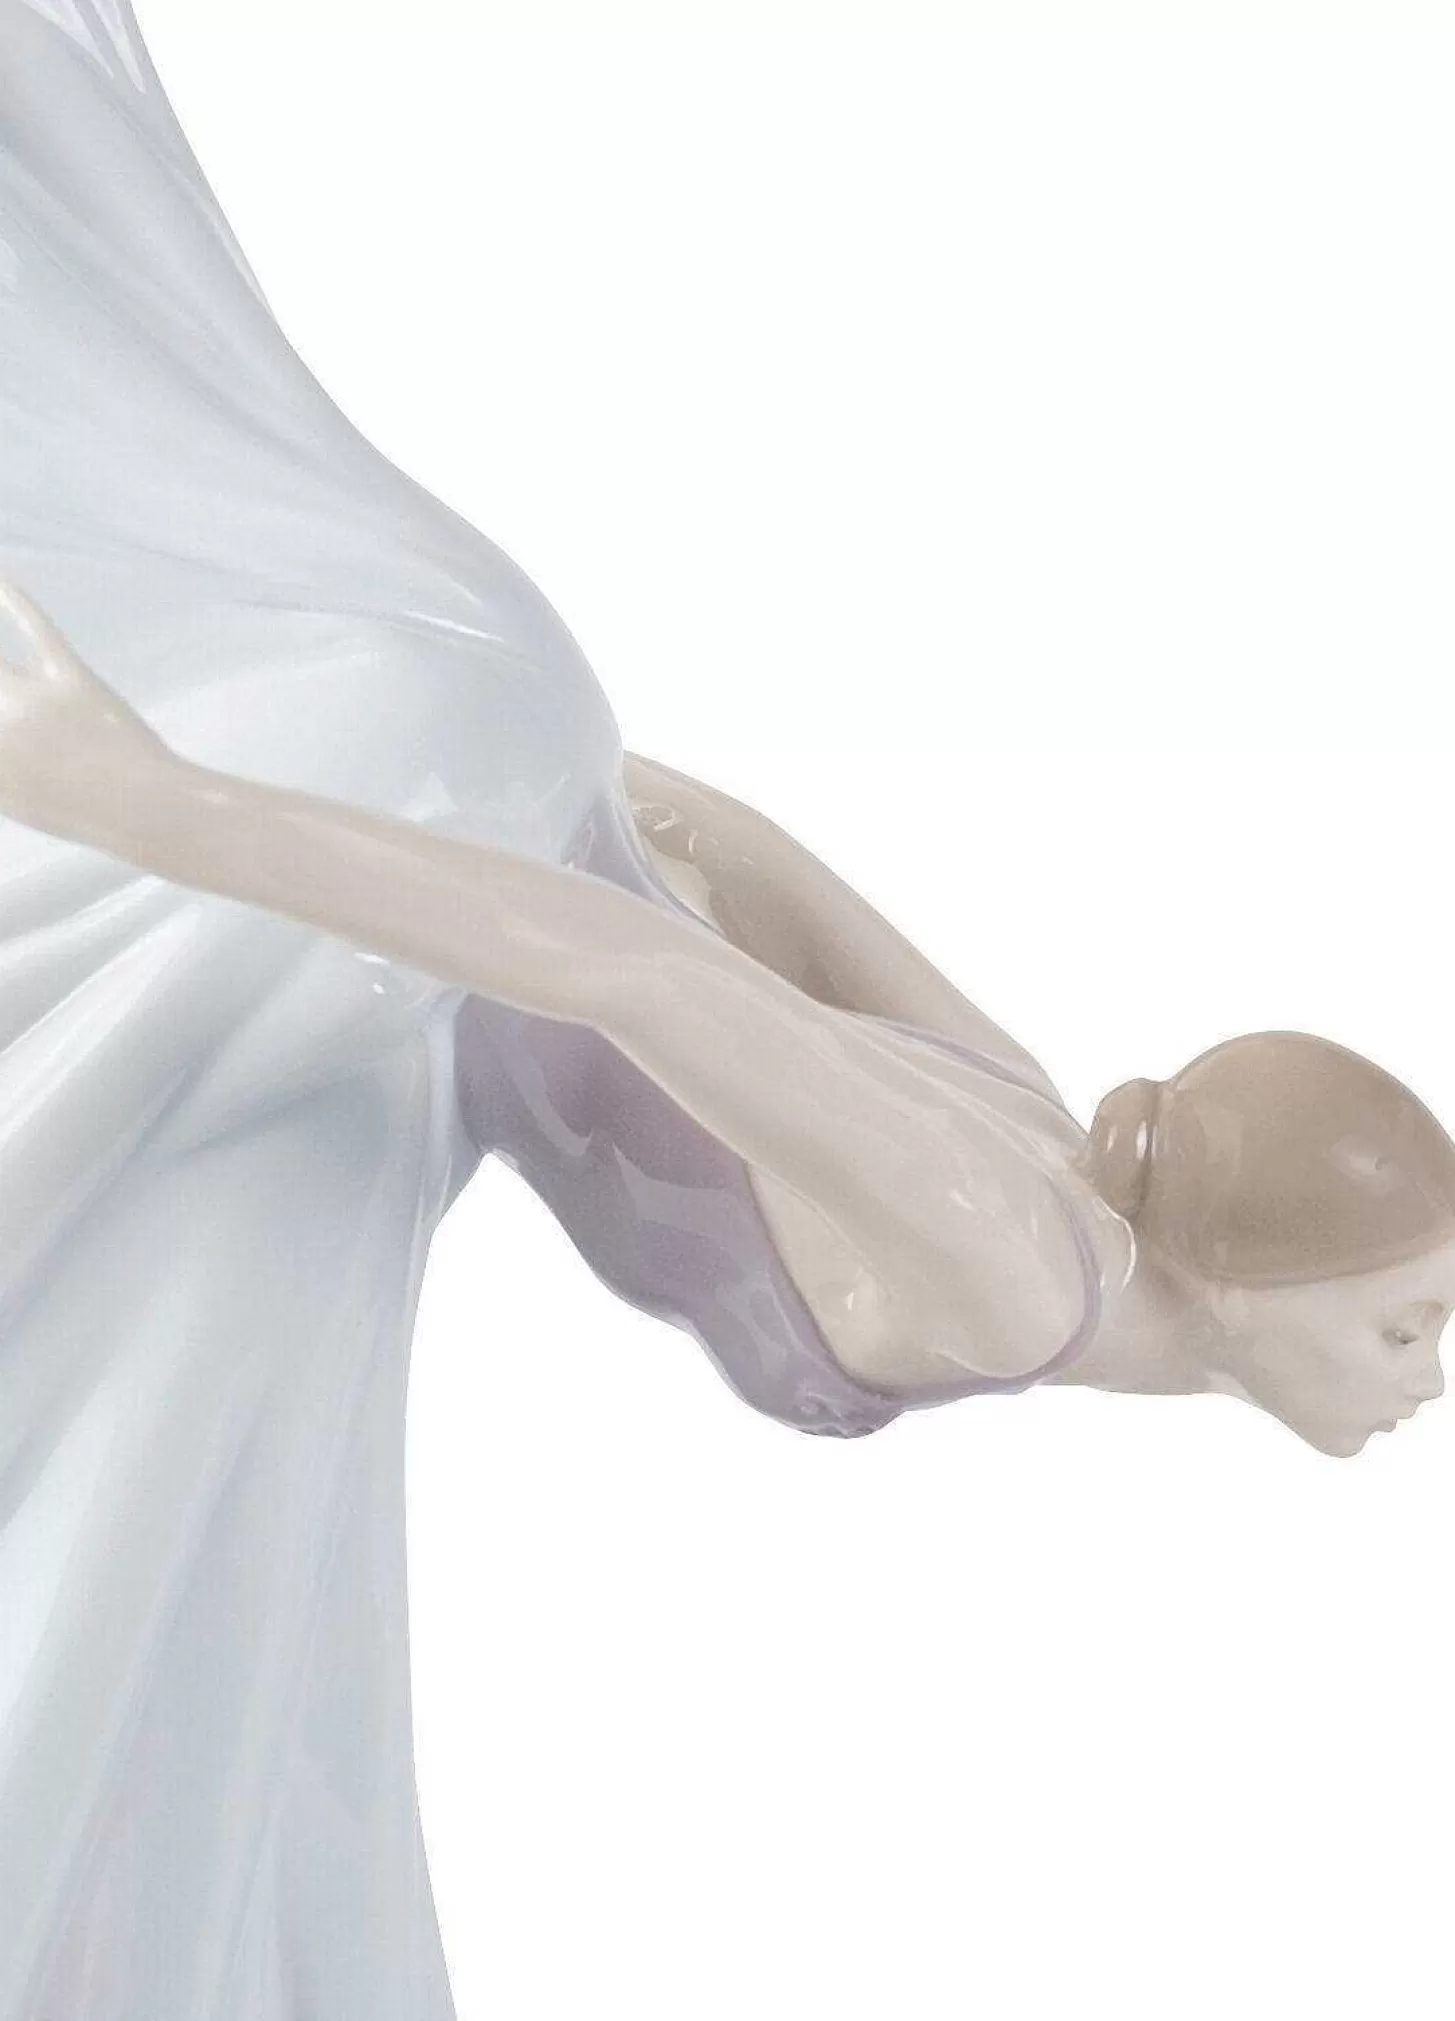 Lladró Giselle Reverence Ballet Figurine^ Performing Arts